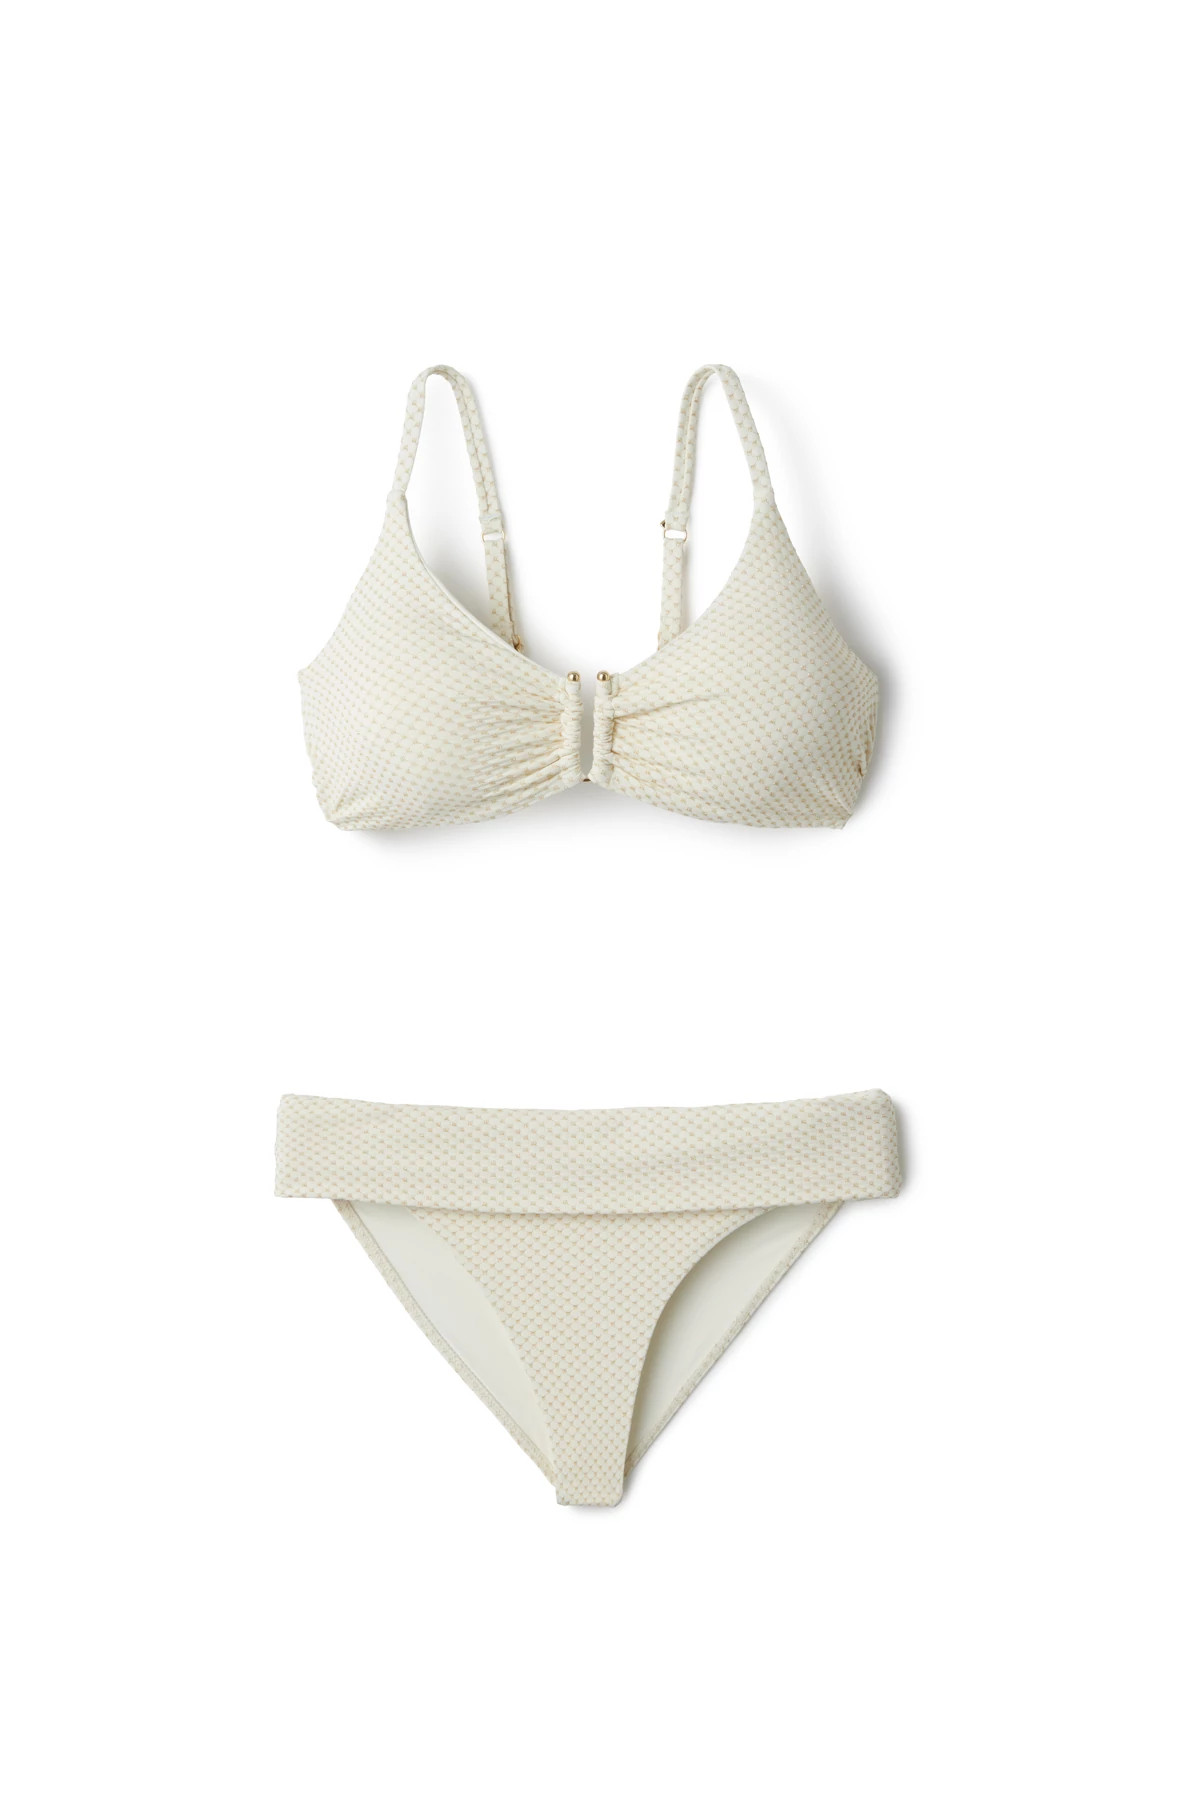 WHITE SAND Sydney Textured Hipster Bikini Bottom image number 5